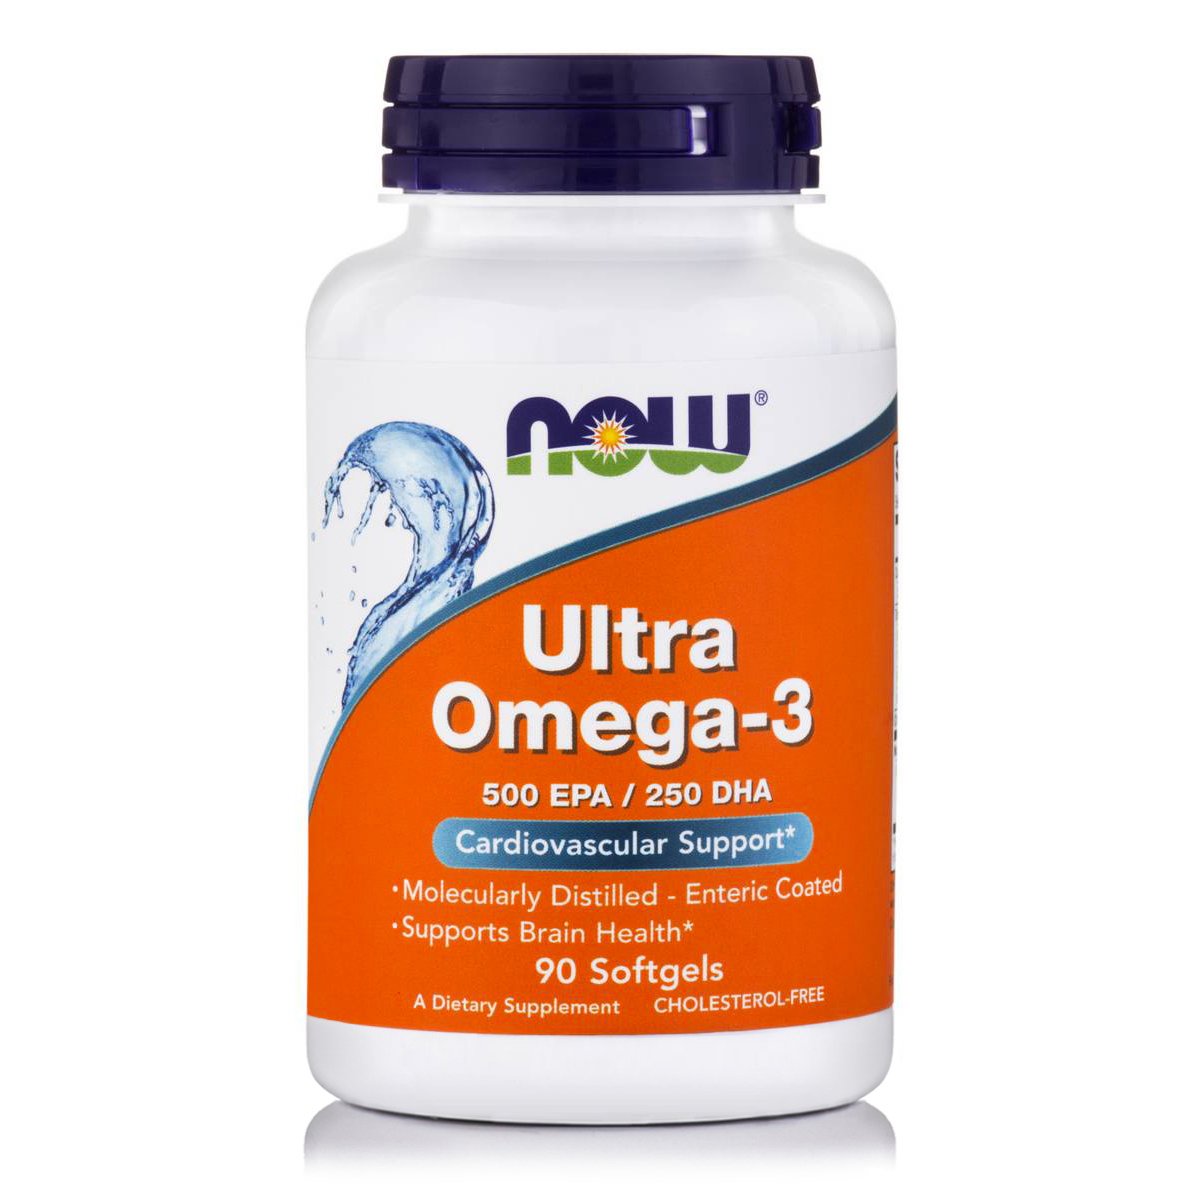 move ultra omega 3 reviews